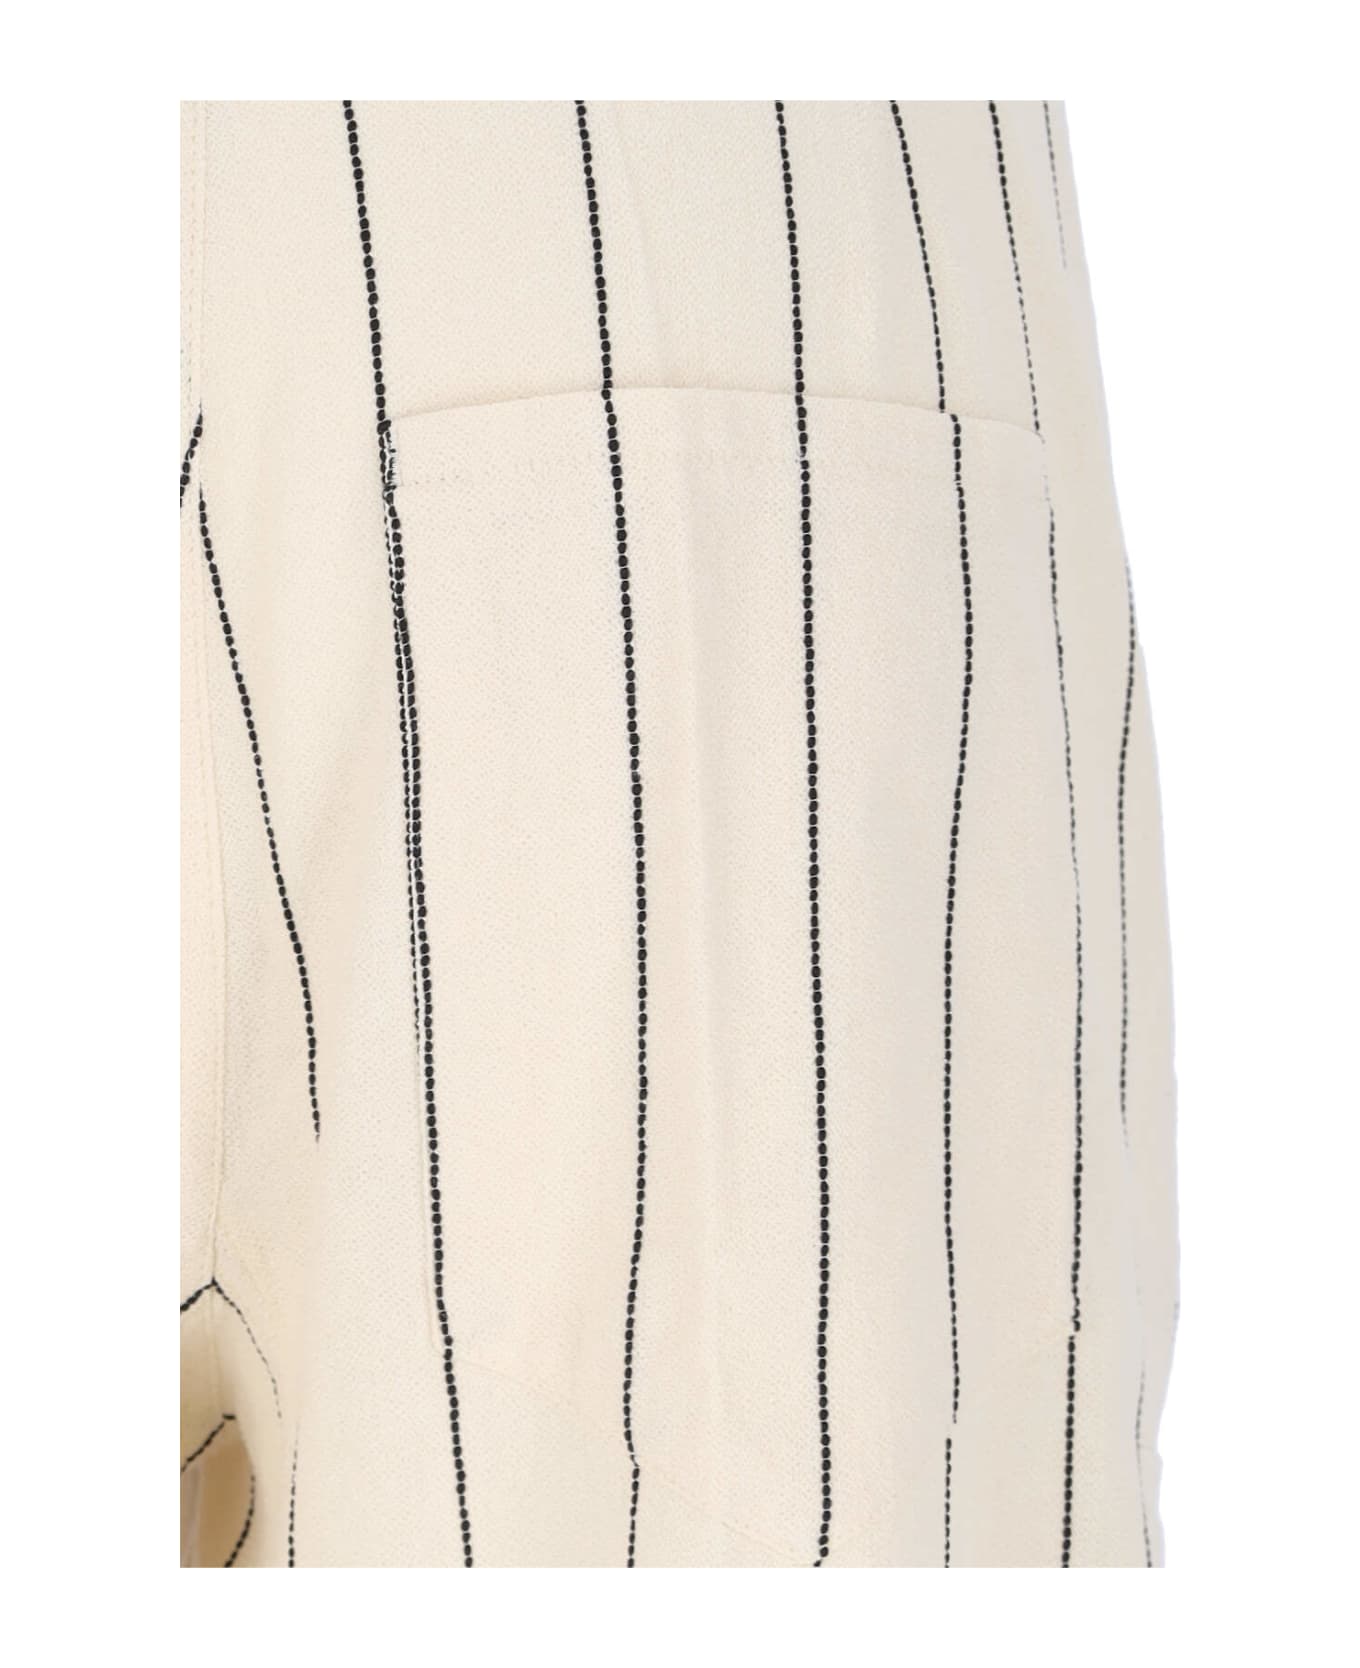 Setchu Striped Pants - Crema